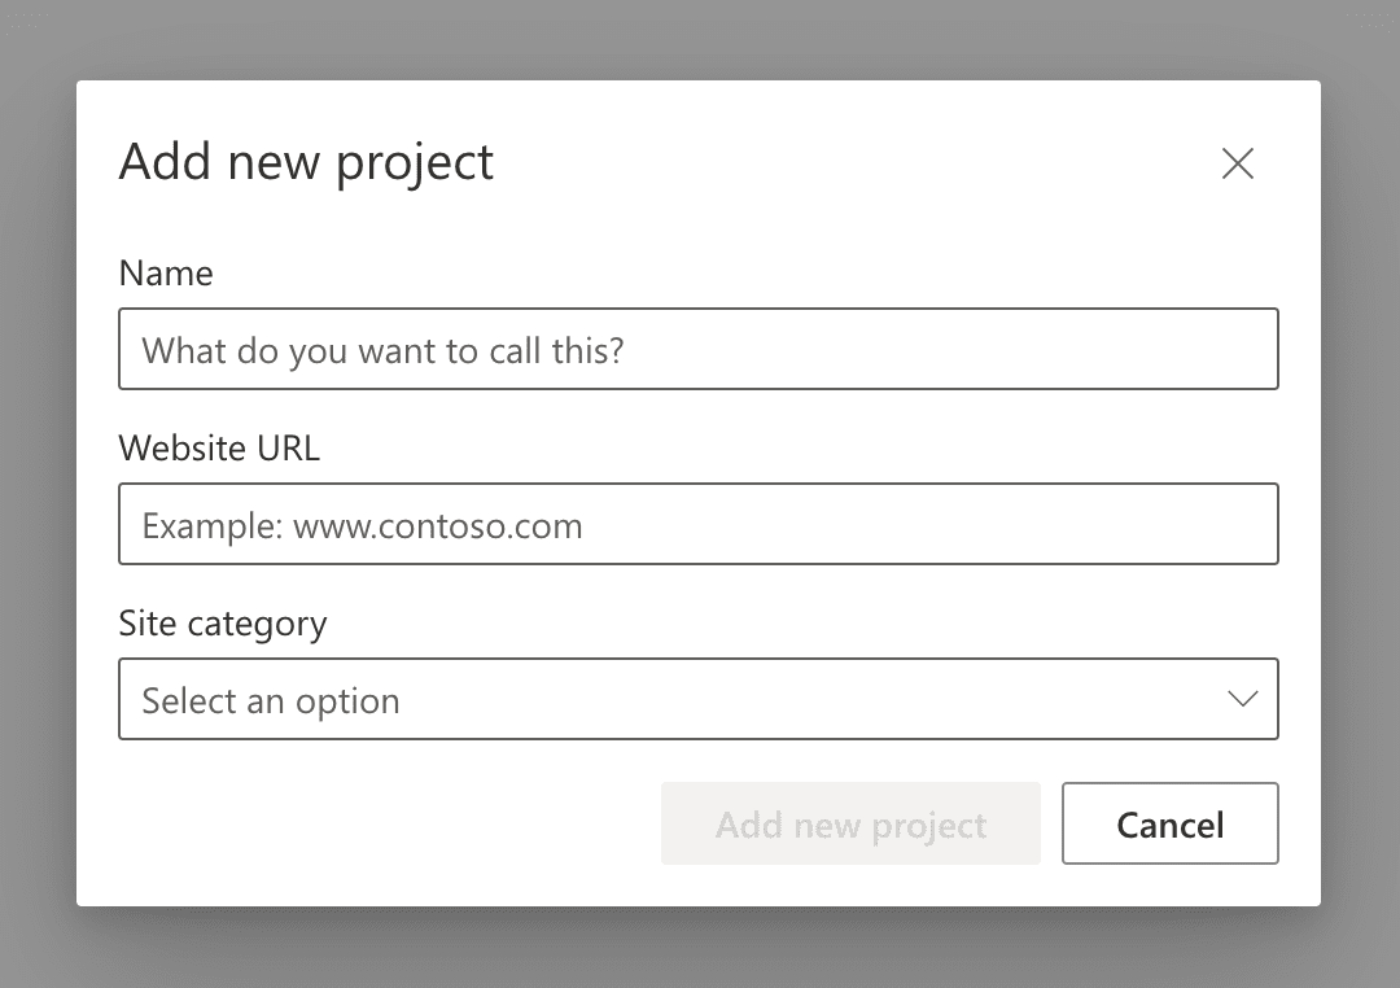 Add new project form in Microsoft Clarity